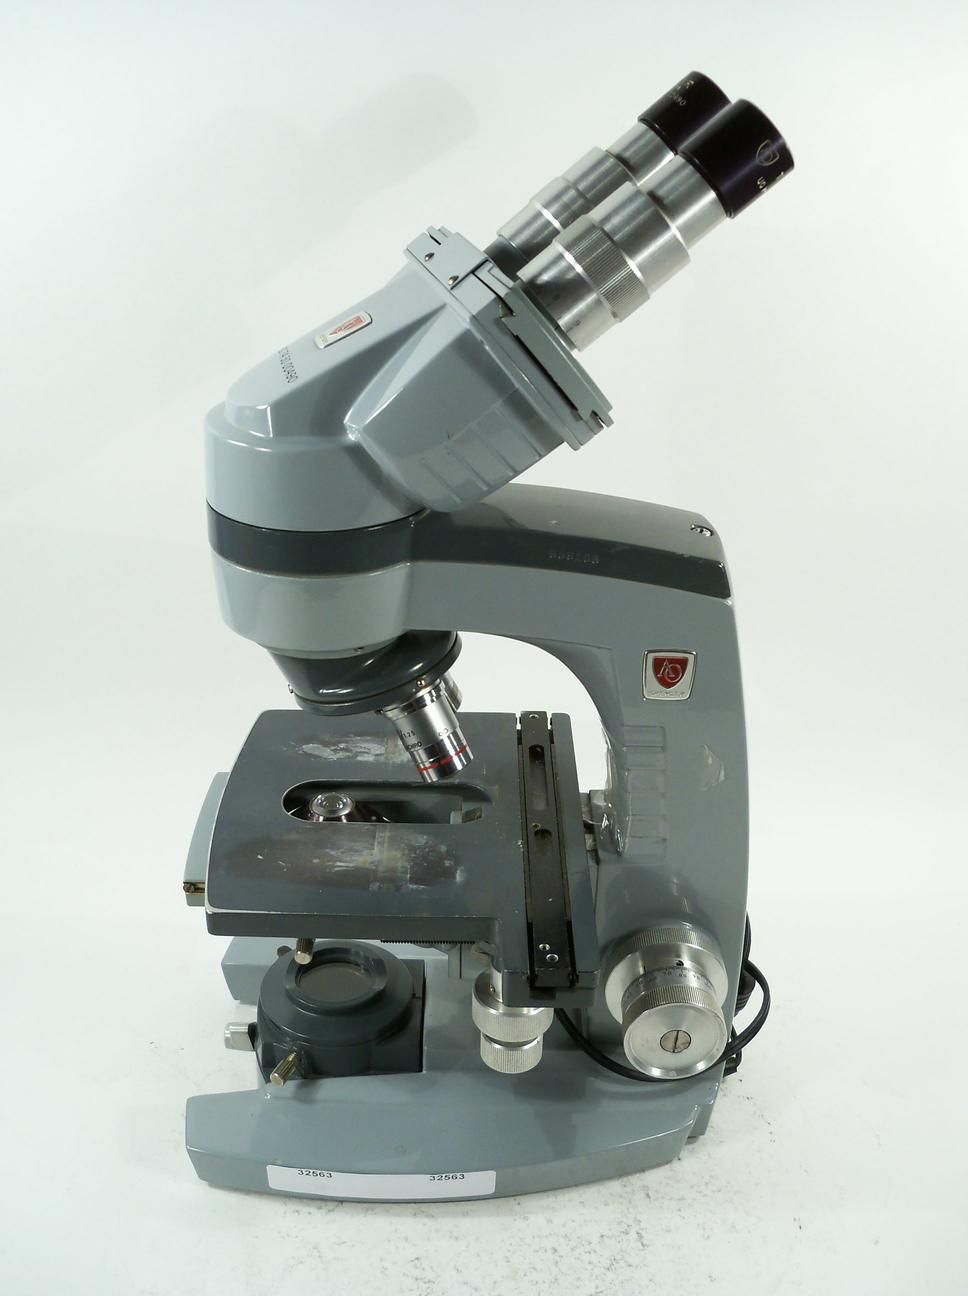 Spencer AO Ocular Microscope 4/100 Objectives 10X Eyepieces